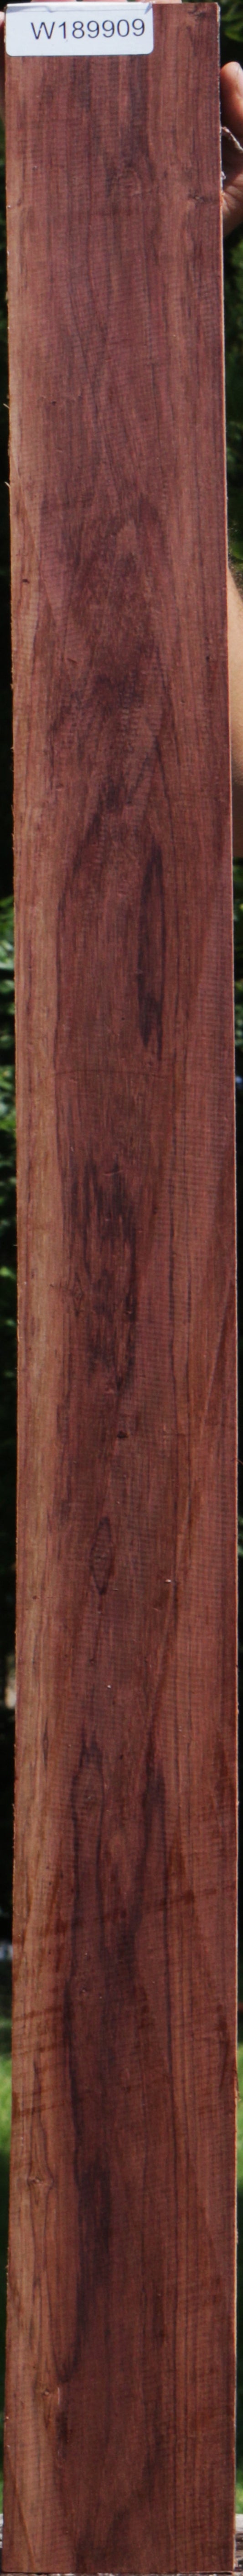 Extra Fancy Honduras Rosewood Lumber